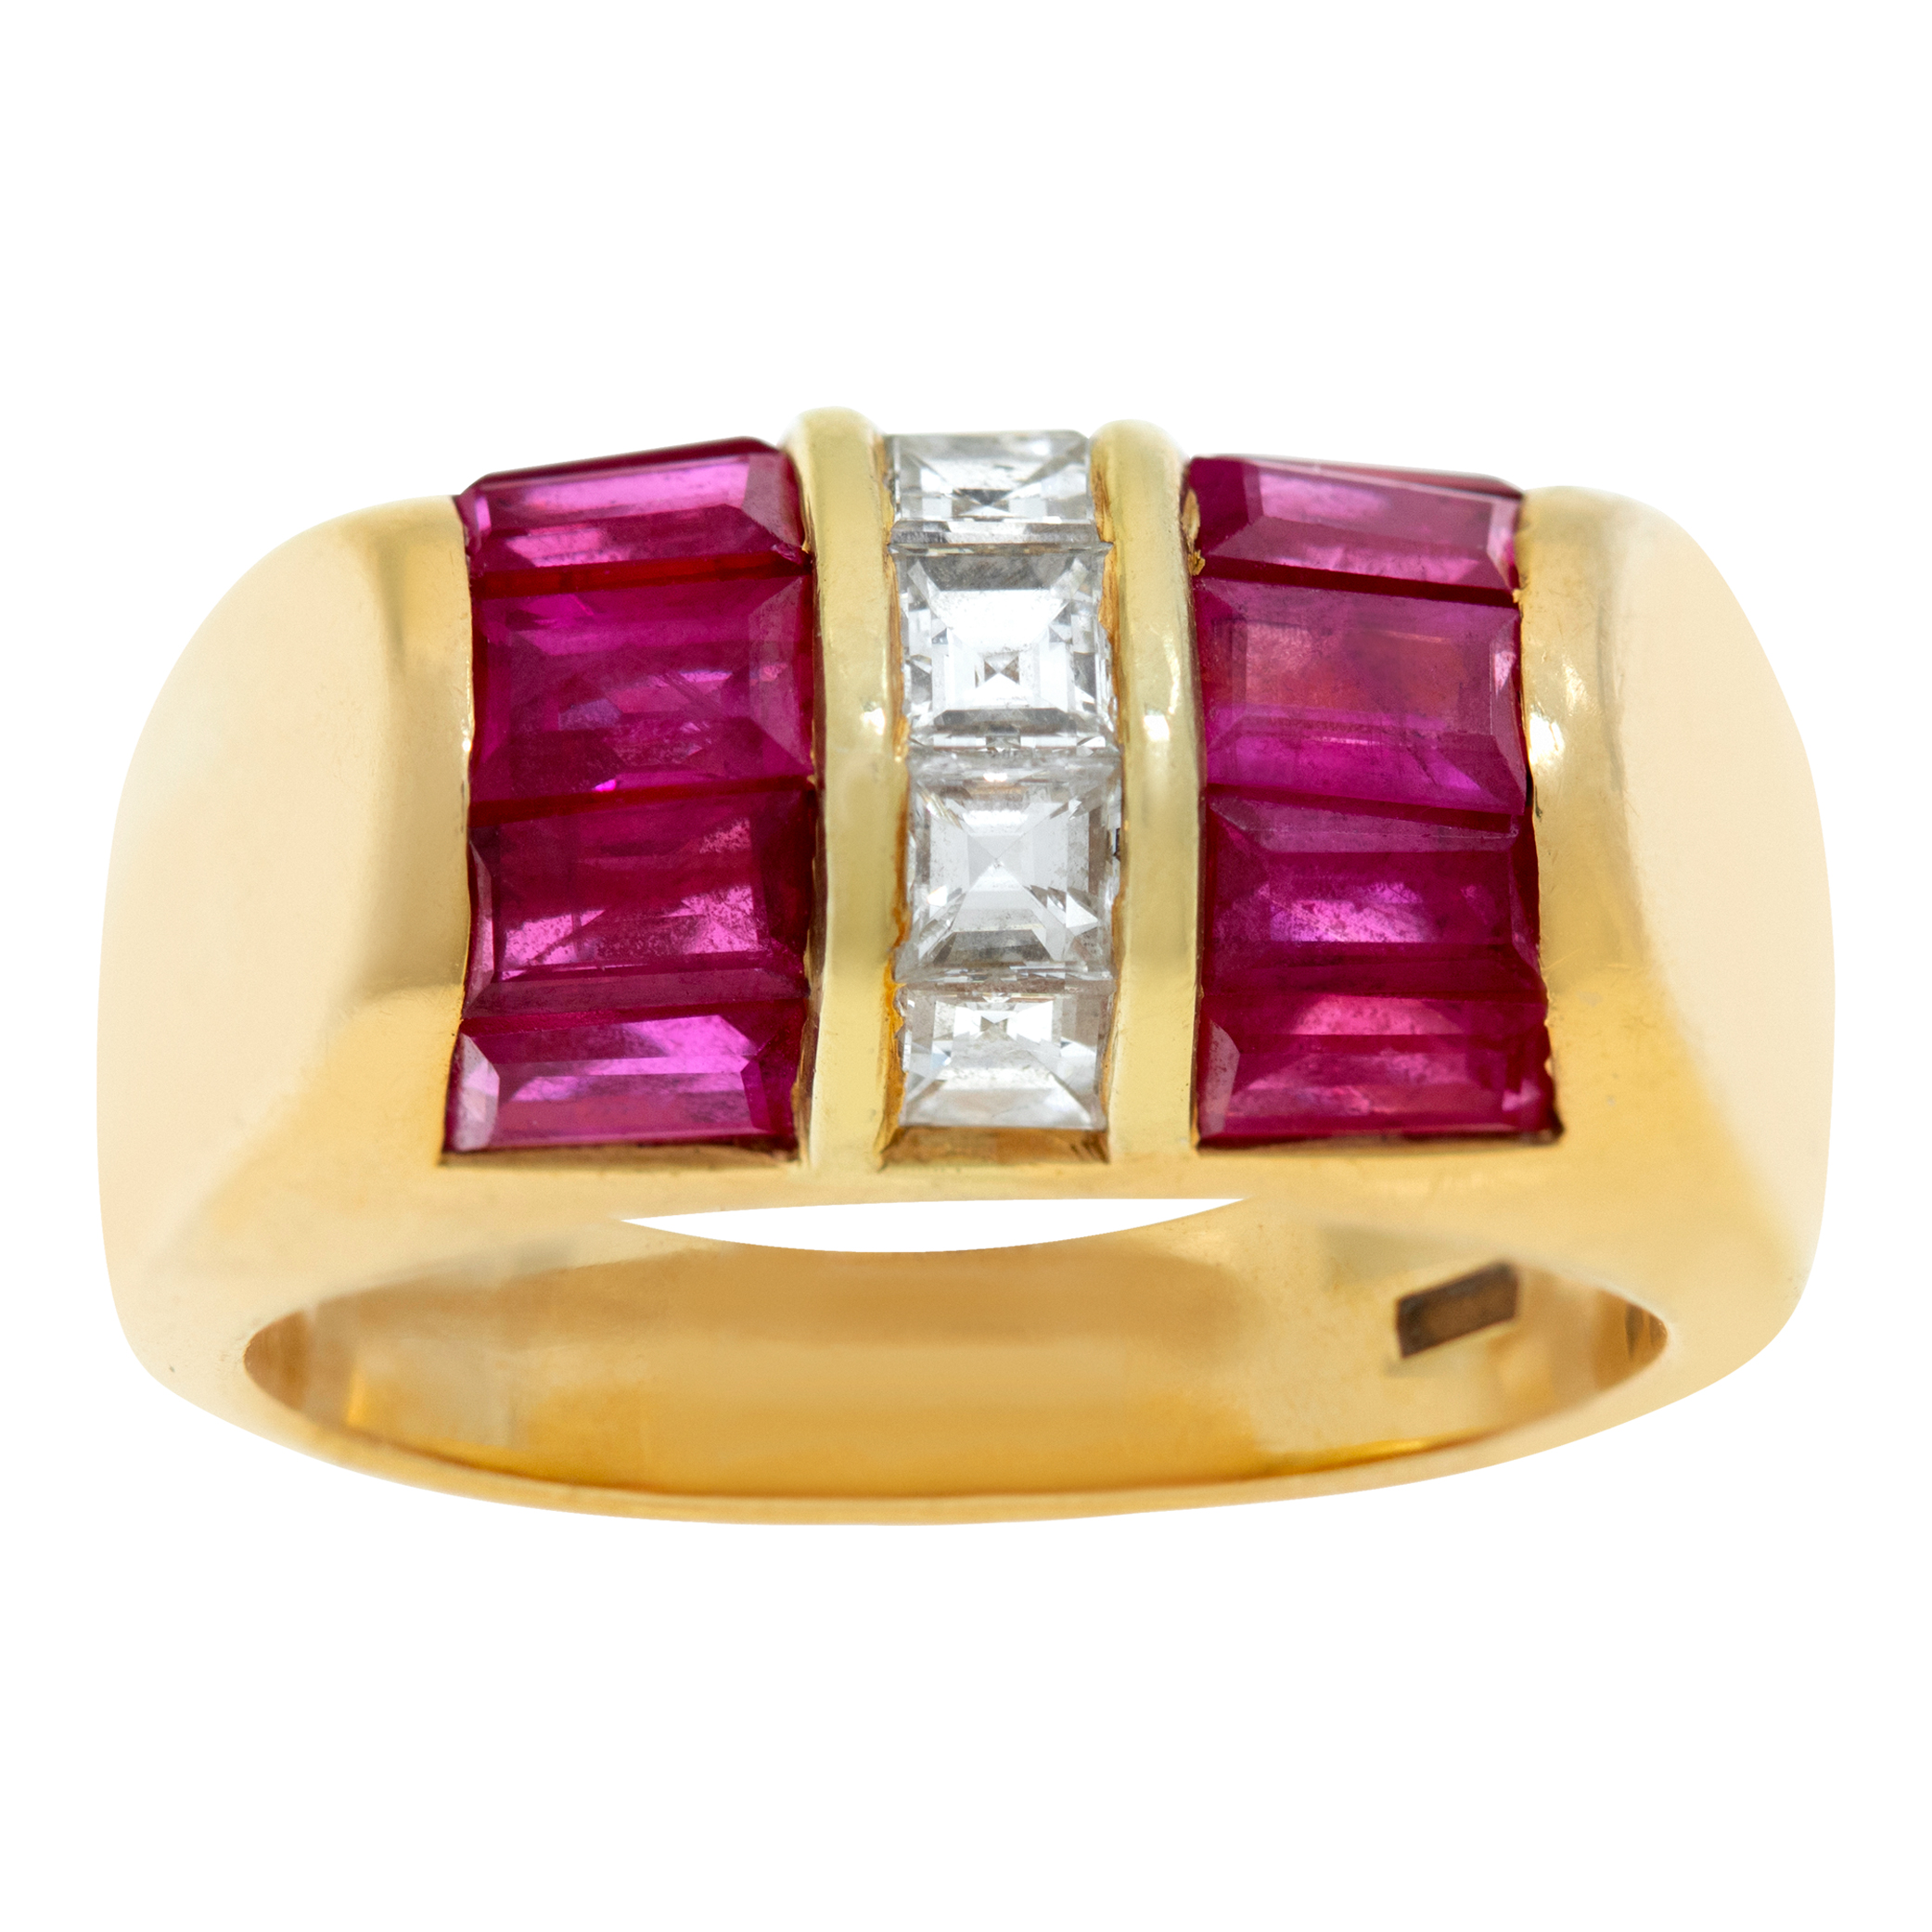 Vintage Bvlgari emerald cut diamonds & baguettes rubies ring in 18k yellow gold. (Stones)